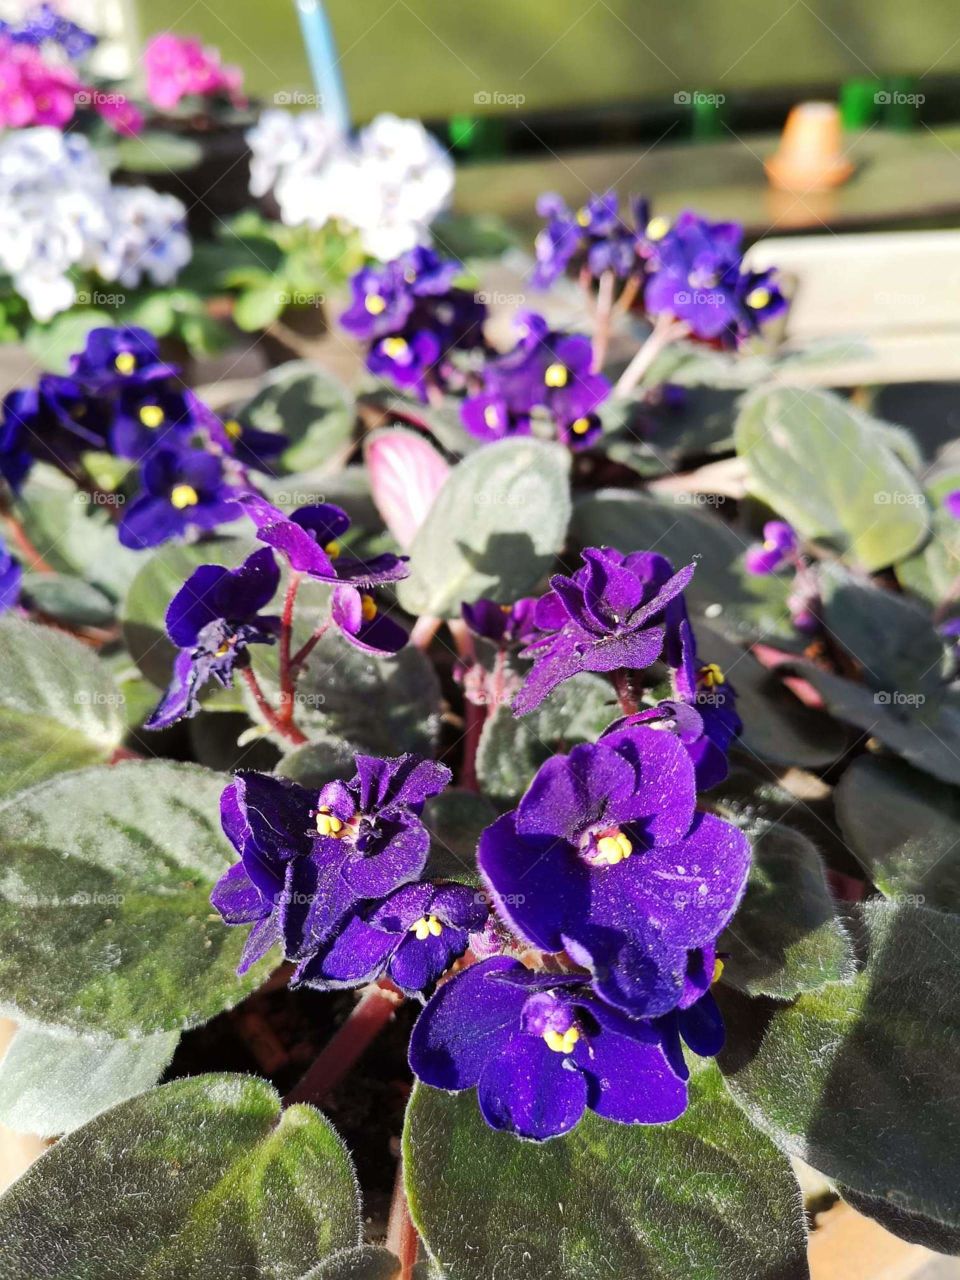 amazing purple flowers 💐